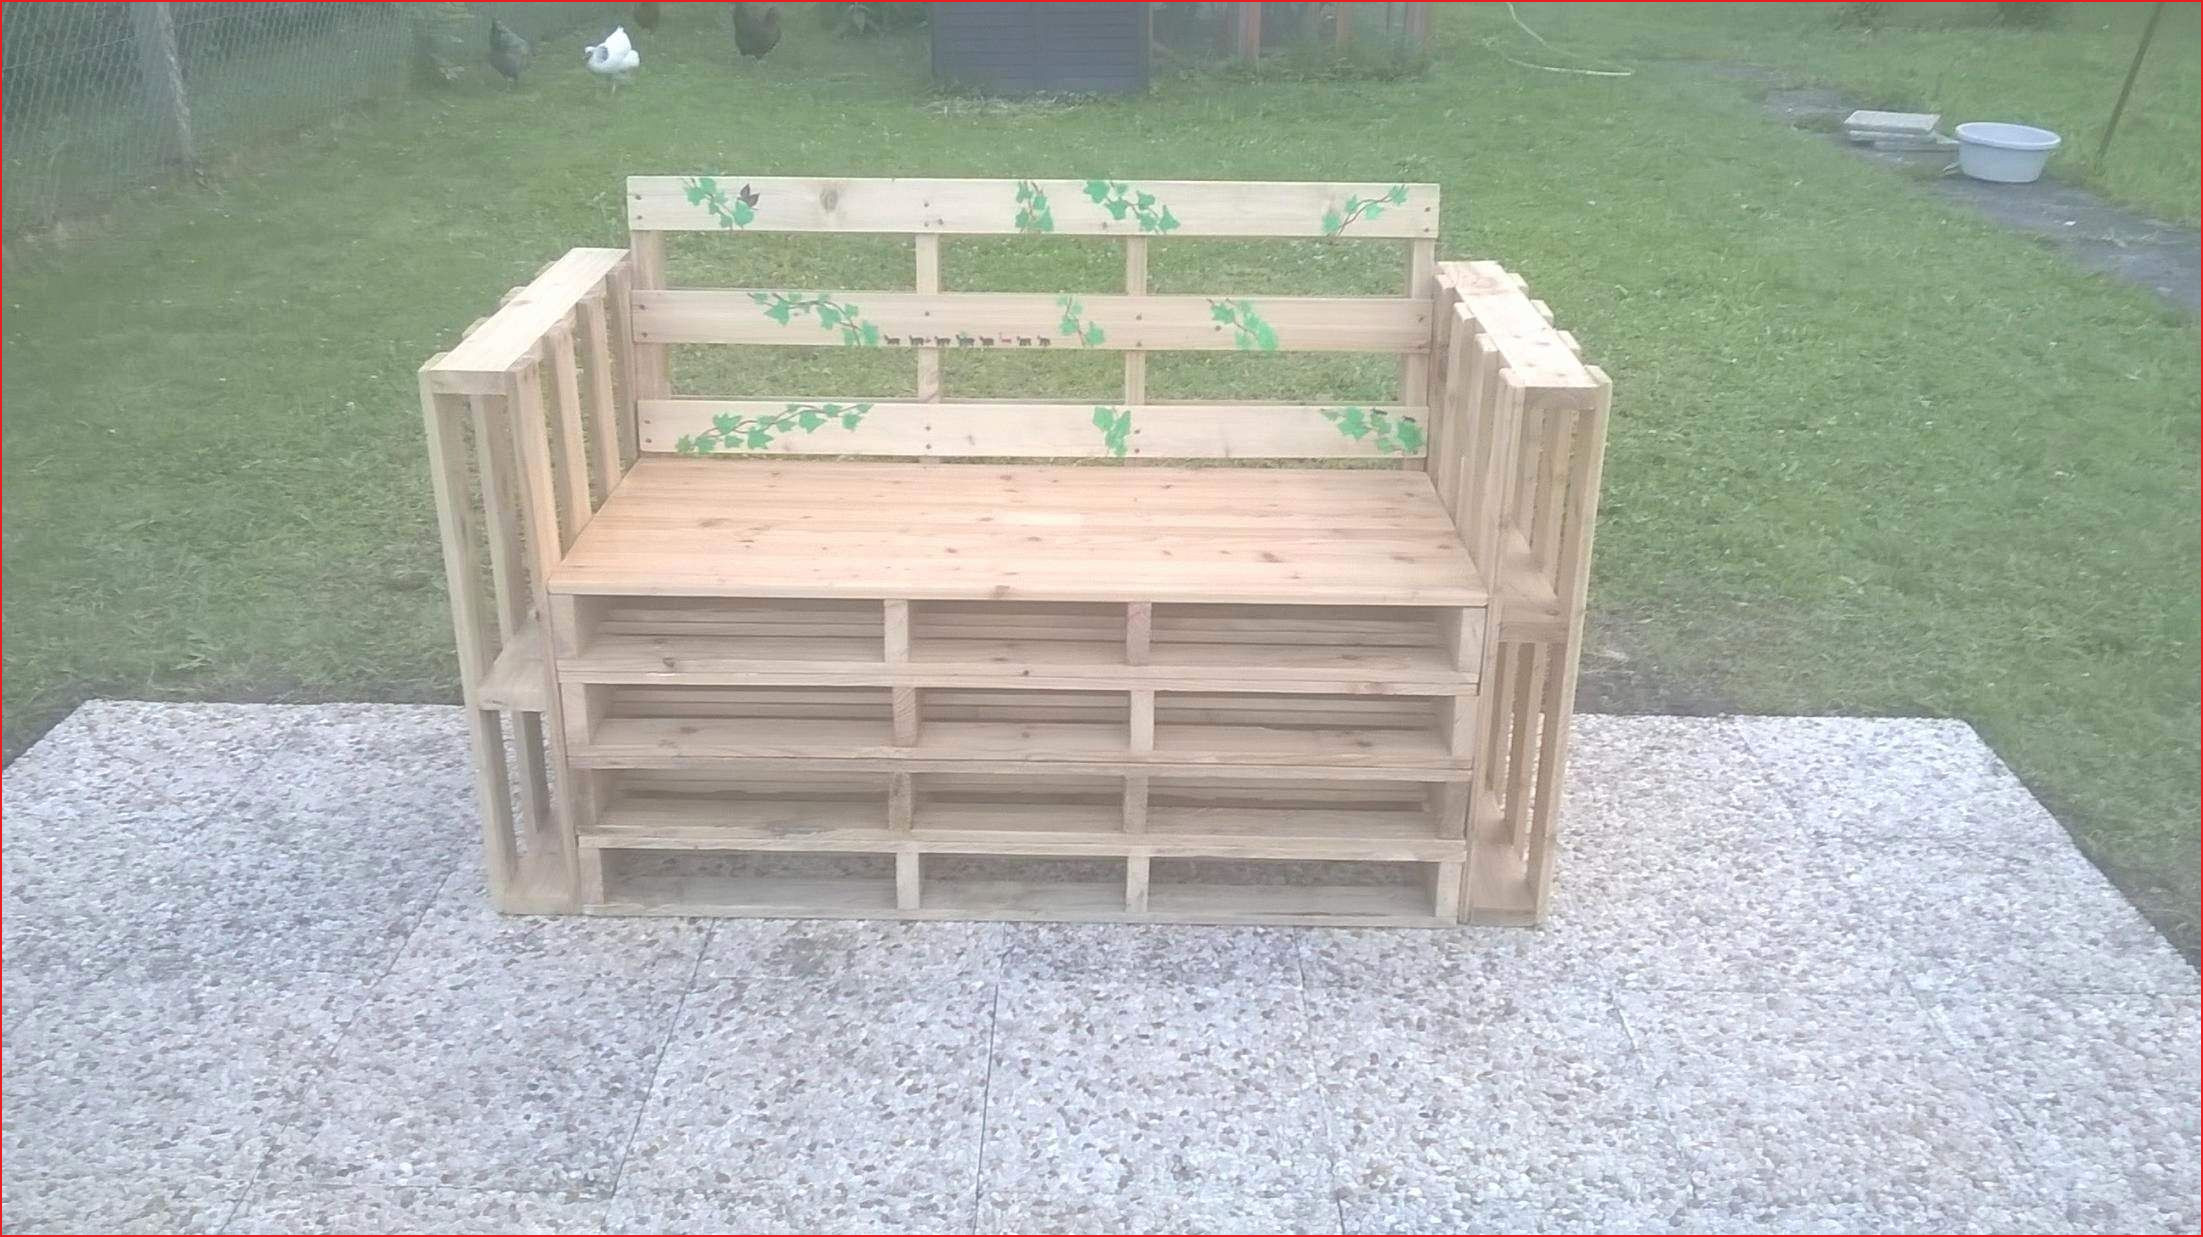 Table Ronde Jardin Inspirant Innovante Banc Pour Jardin Image De Jardin Décoratif